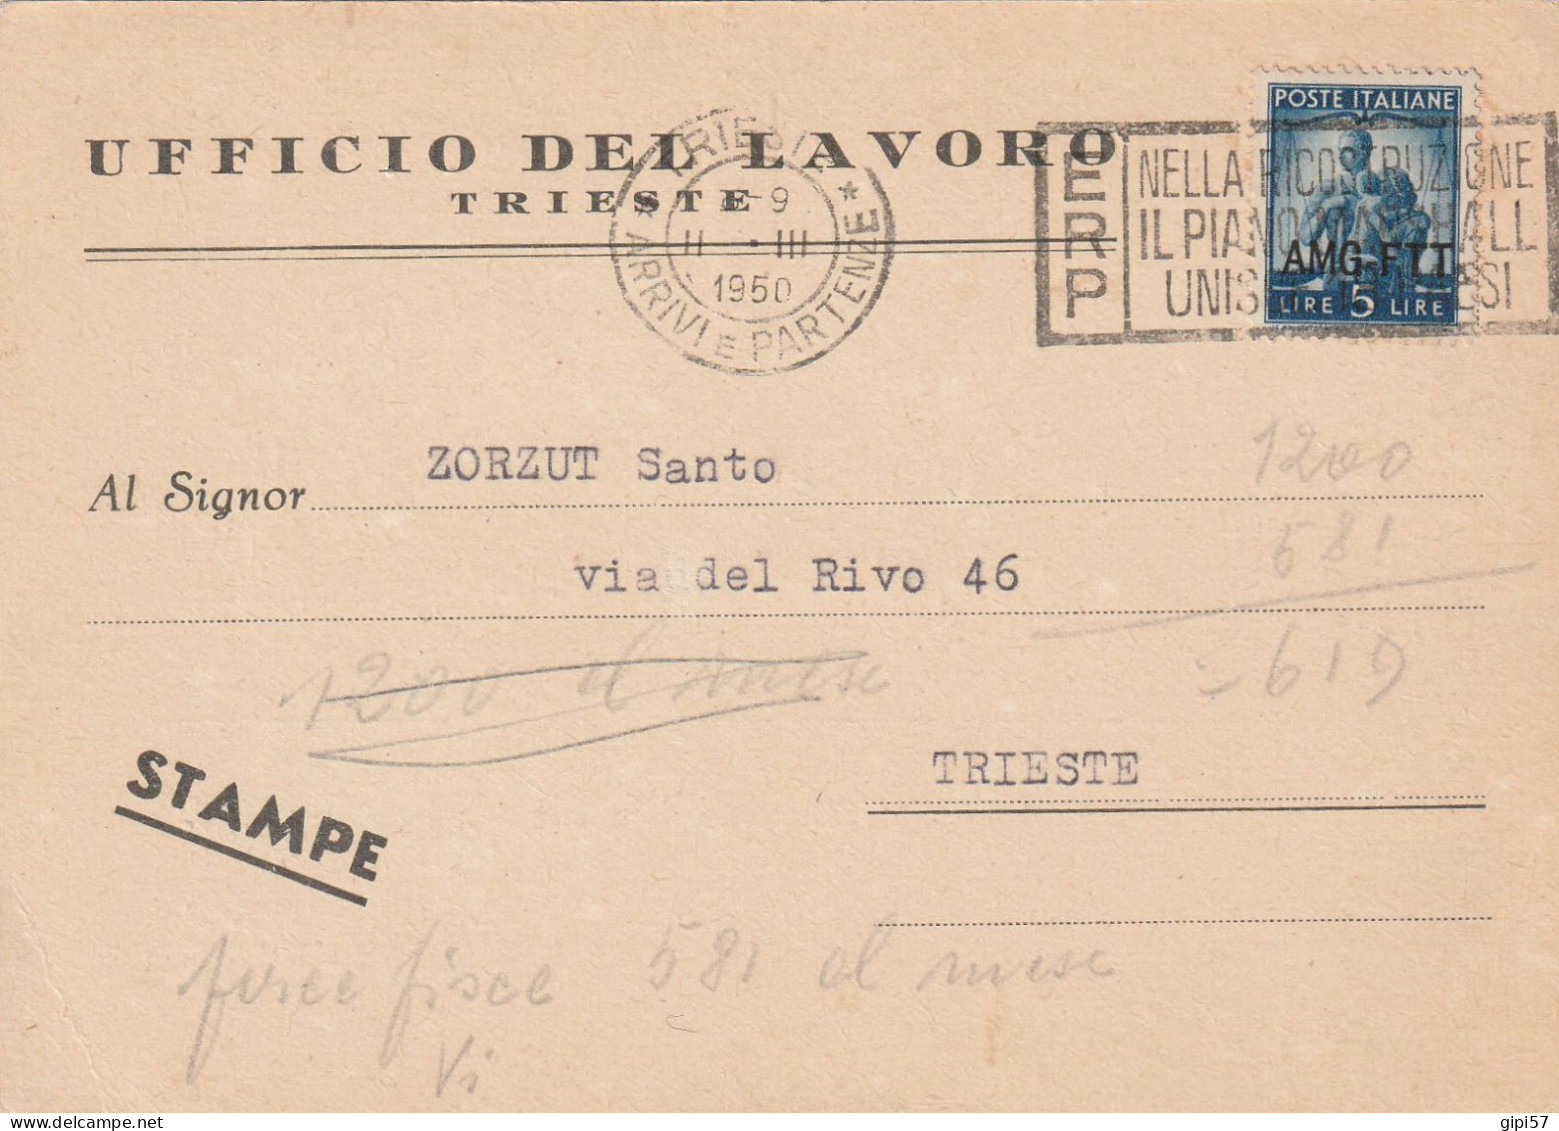 STAMPE UFFICIO LAVORO TRIESTE ANNULLO TARGHETTA ERP 1950 - Poststempel